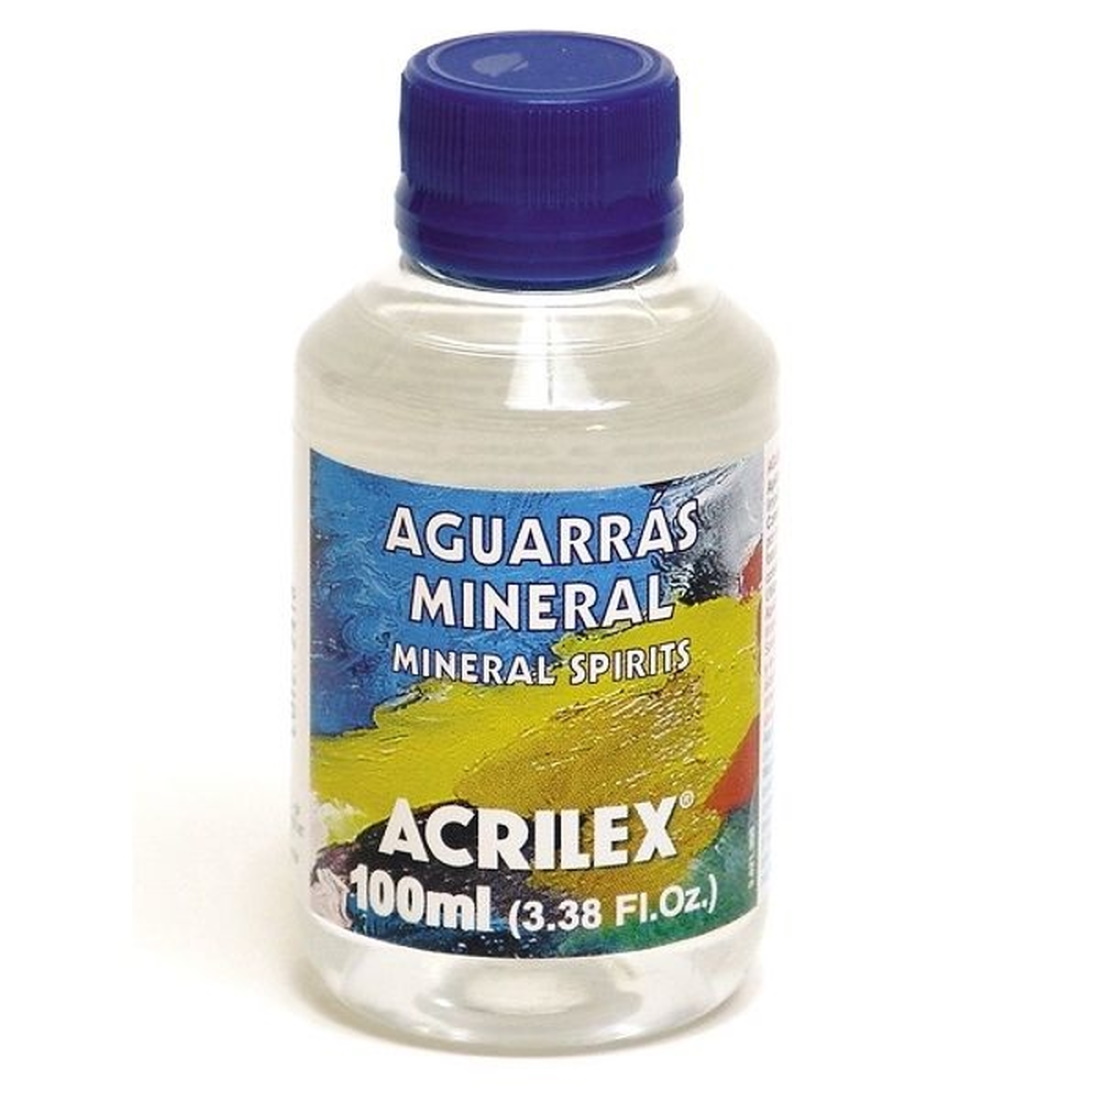 Aguarrás mineral Acrilex 100ml